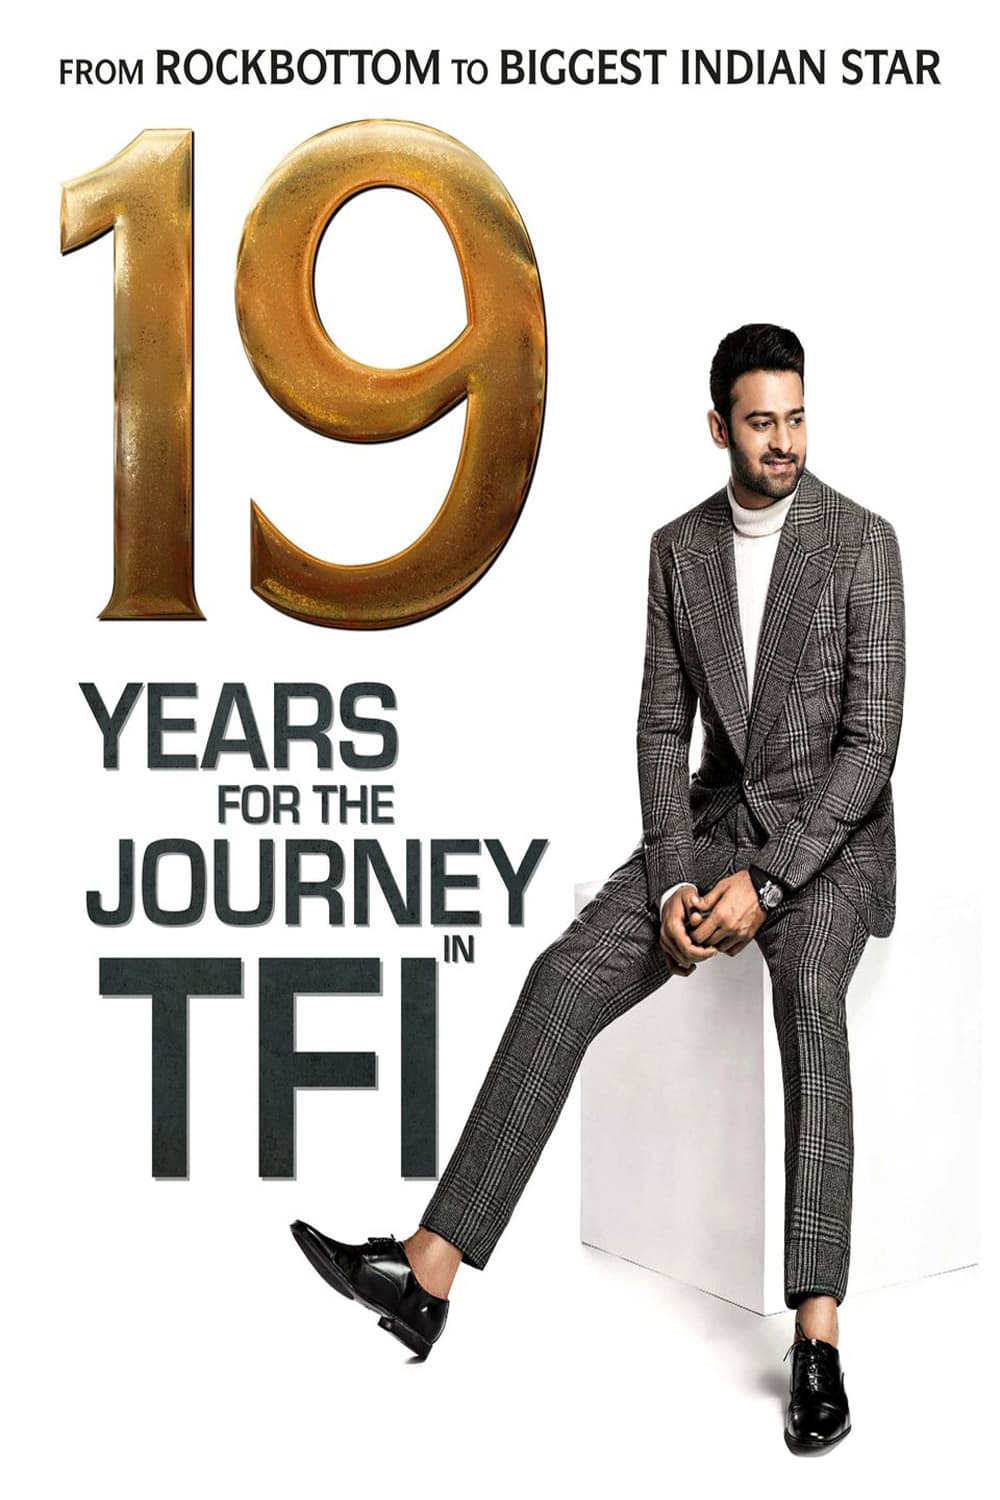 19 years for Prabhas in TFI 